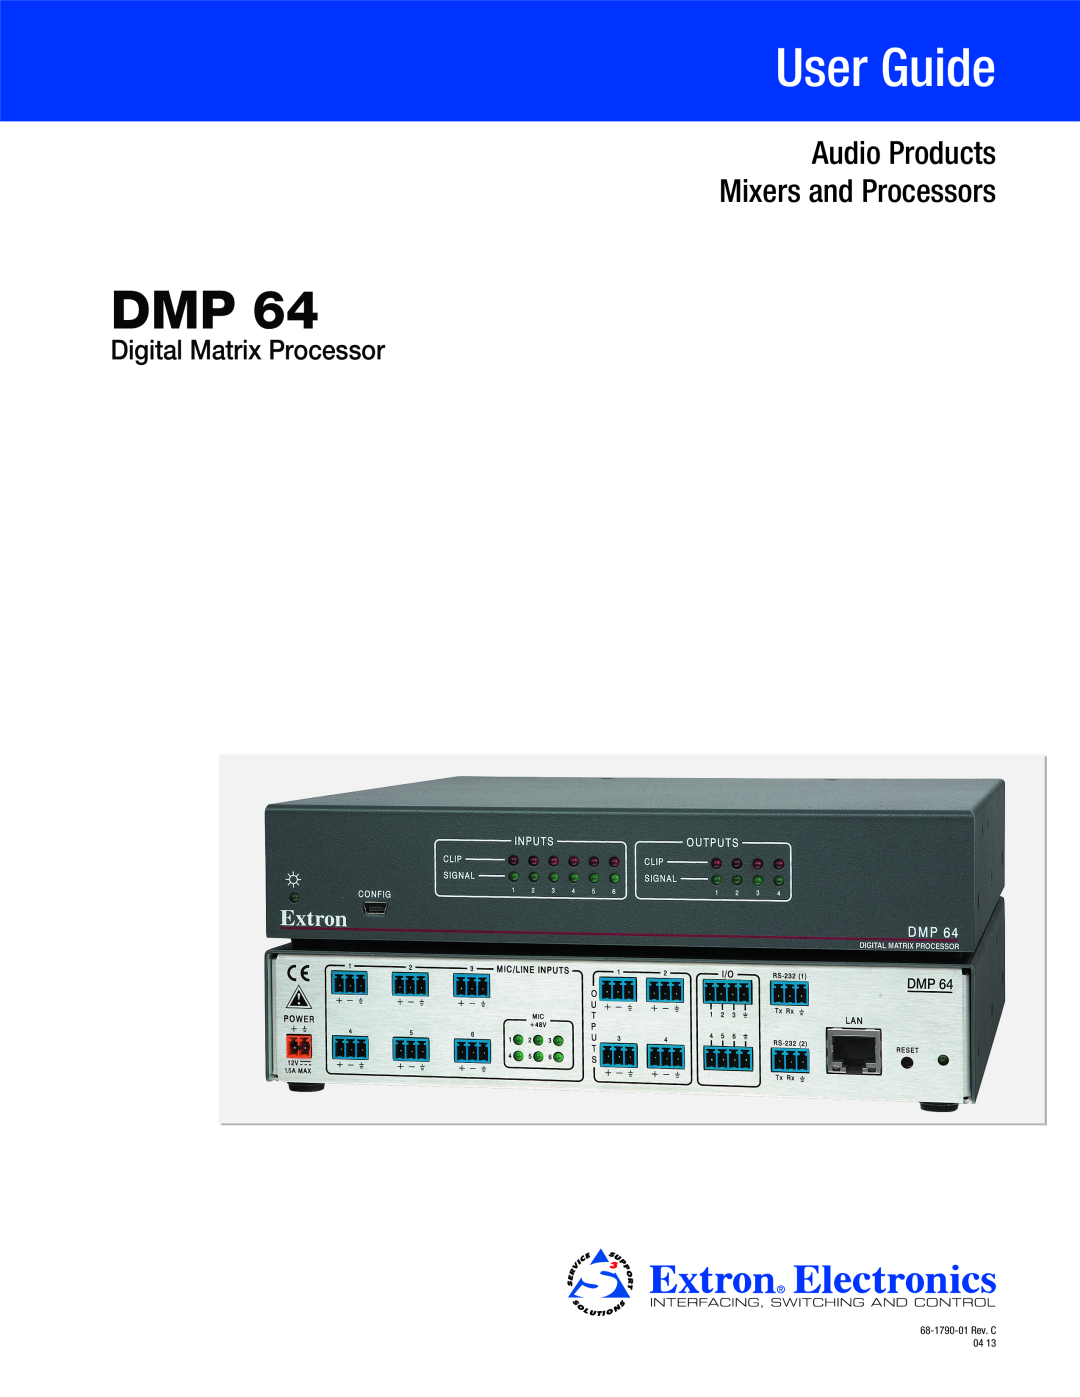 Extron electronic DMP 64 setup guide Disconnect power, Mount the DMP, Cable the Digital Matrix Processor, e f g g 